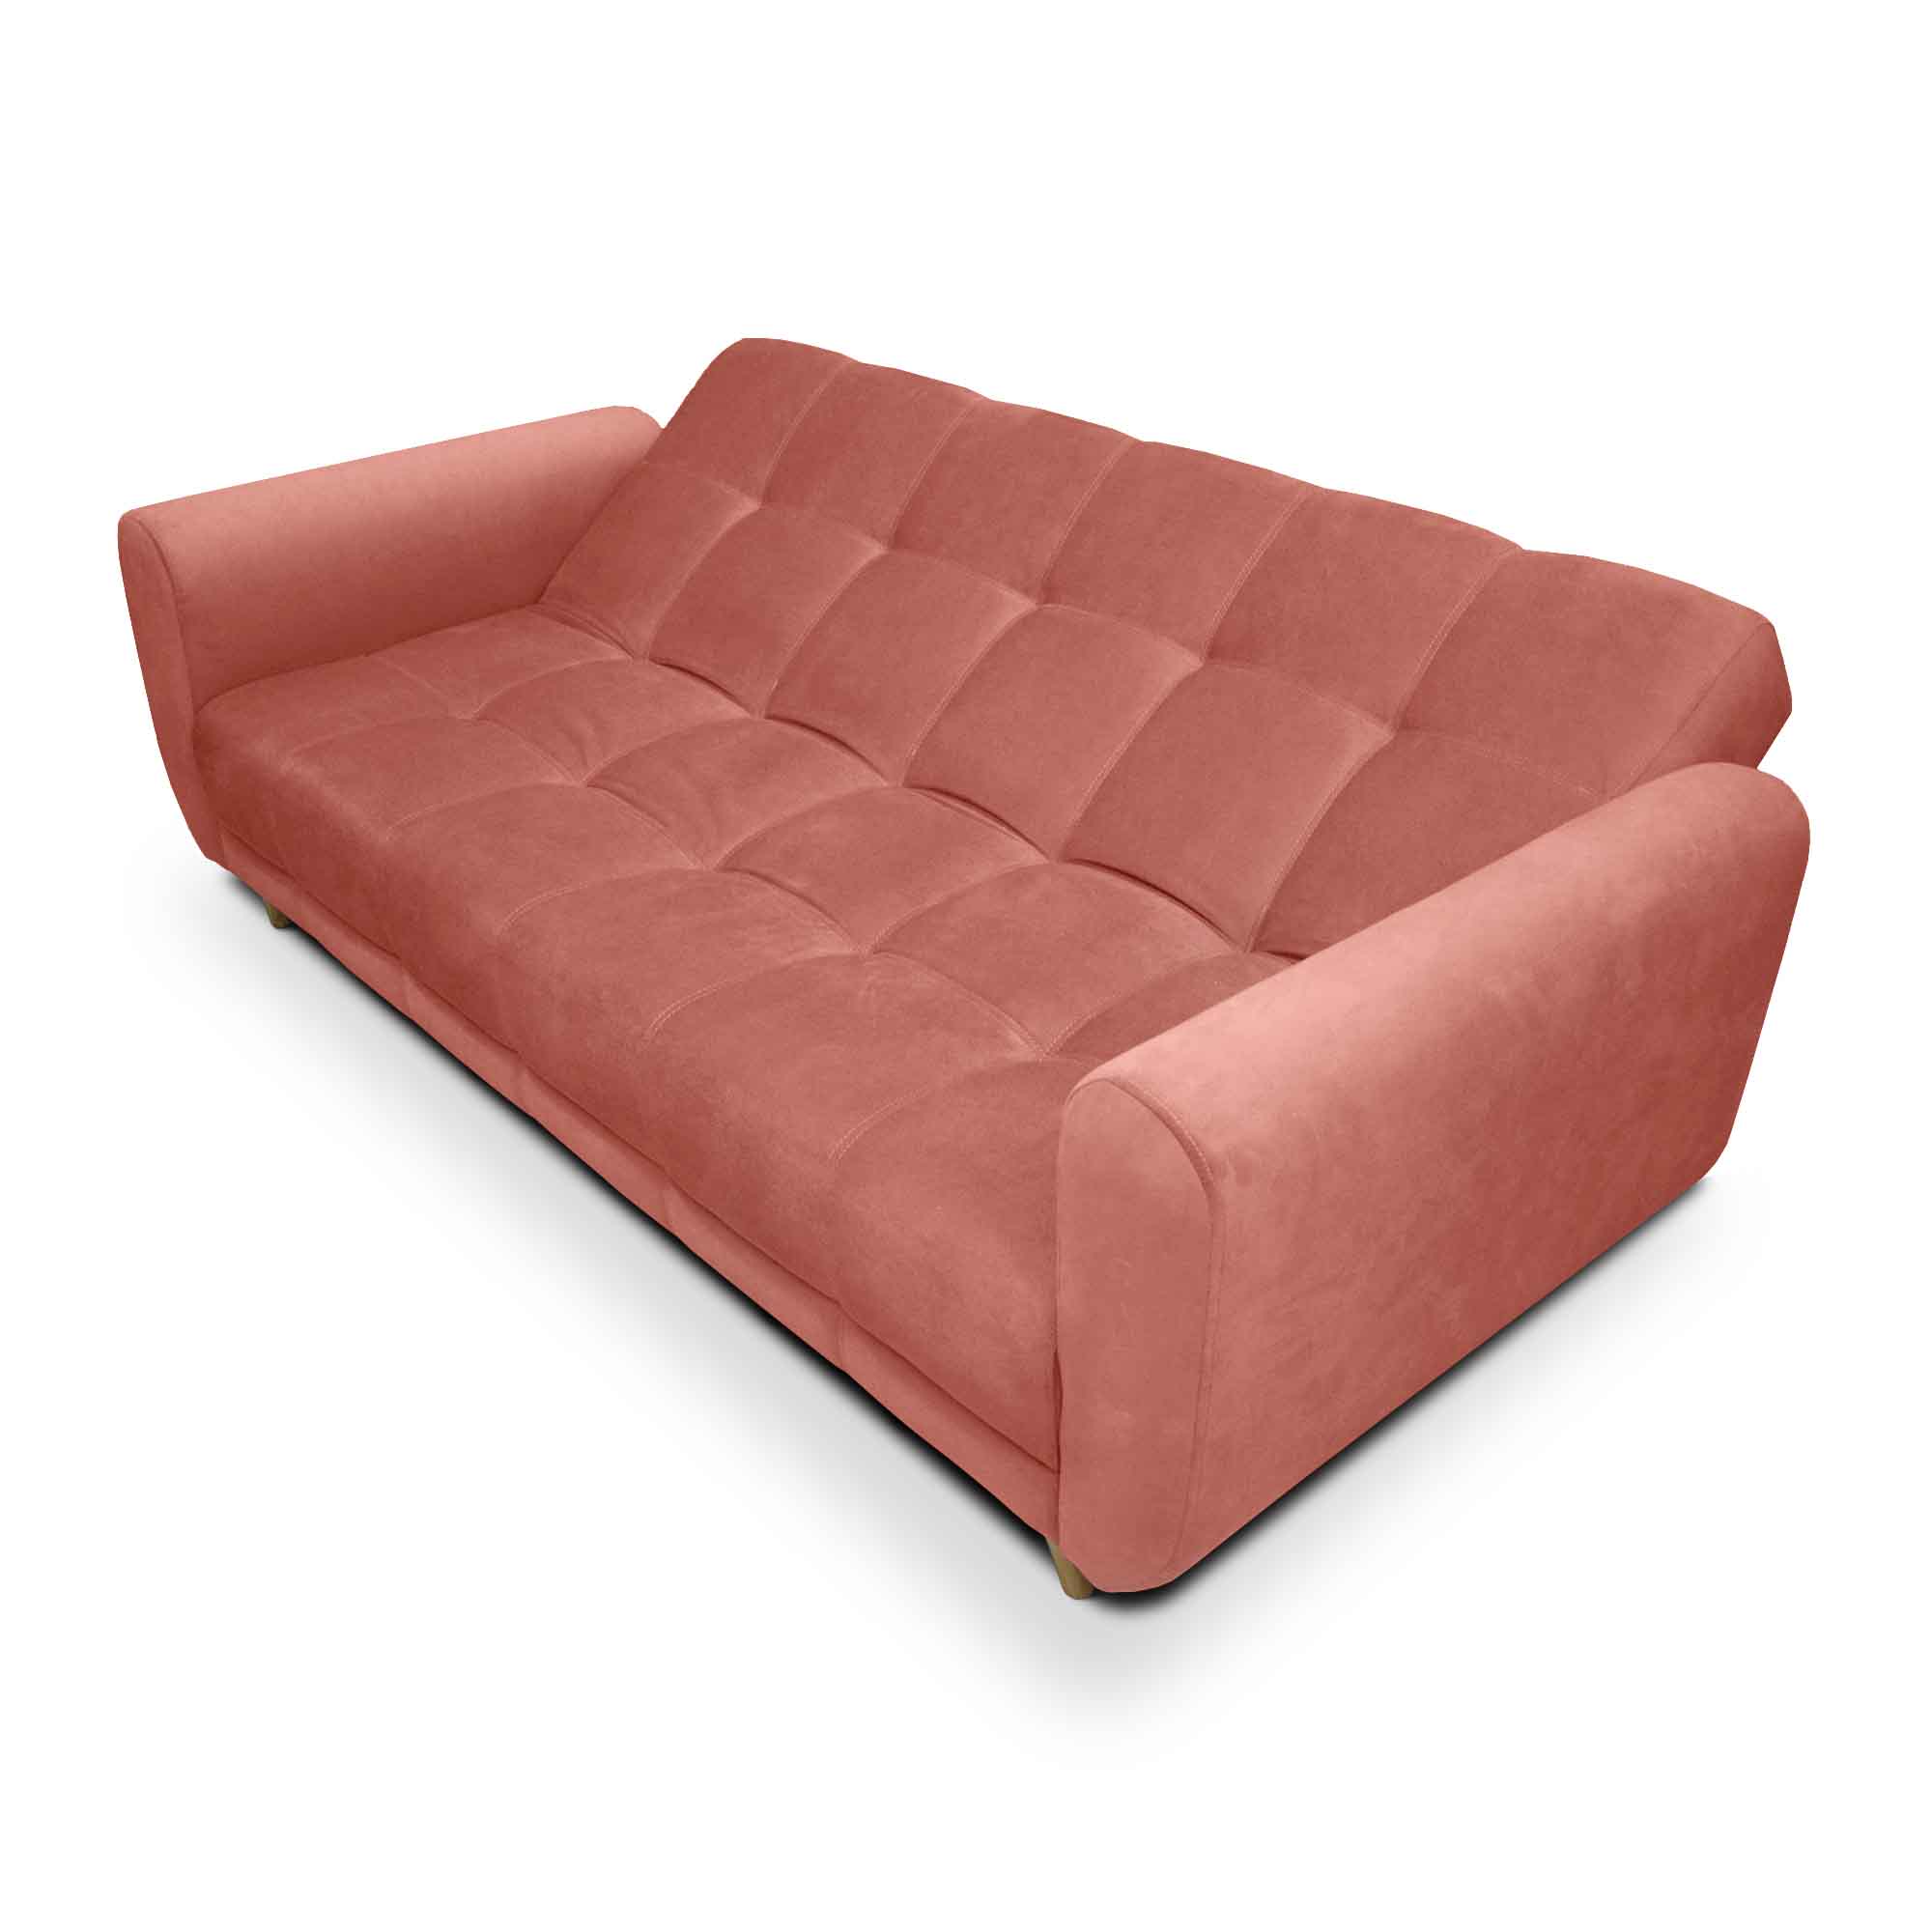 Sofa Cama Comfort Sistema Clic Clac Color Coral